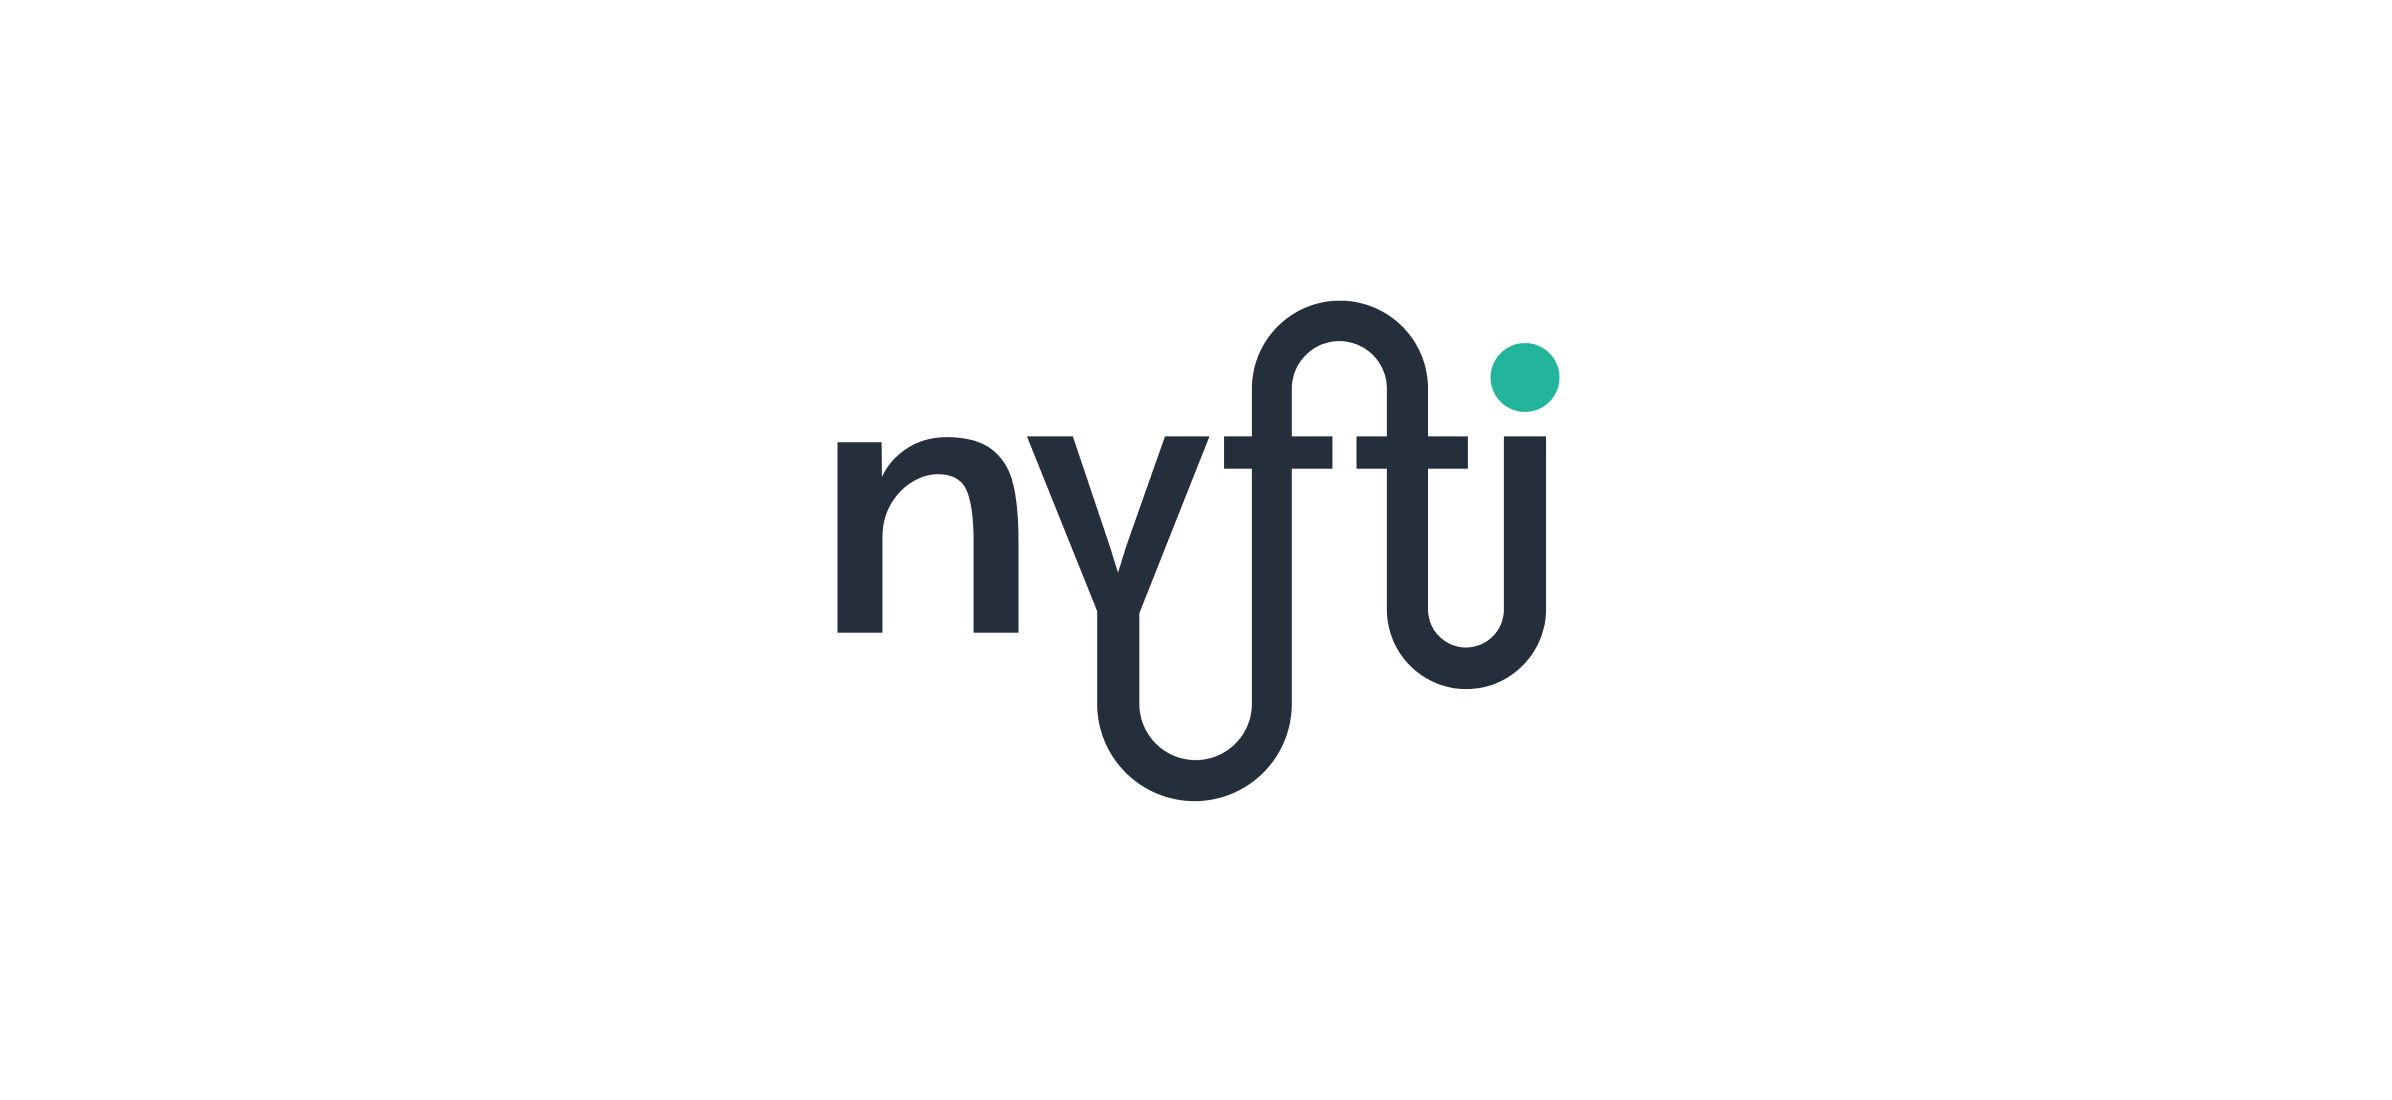 Nyfti logo